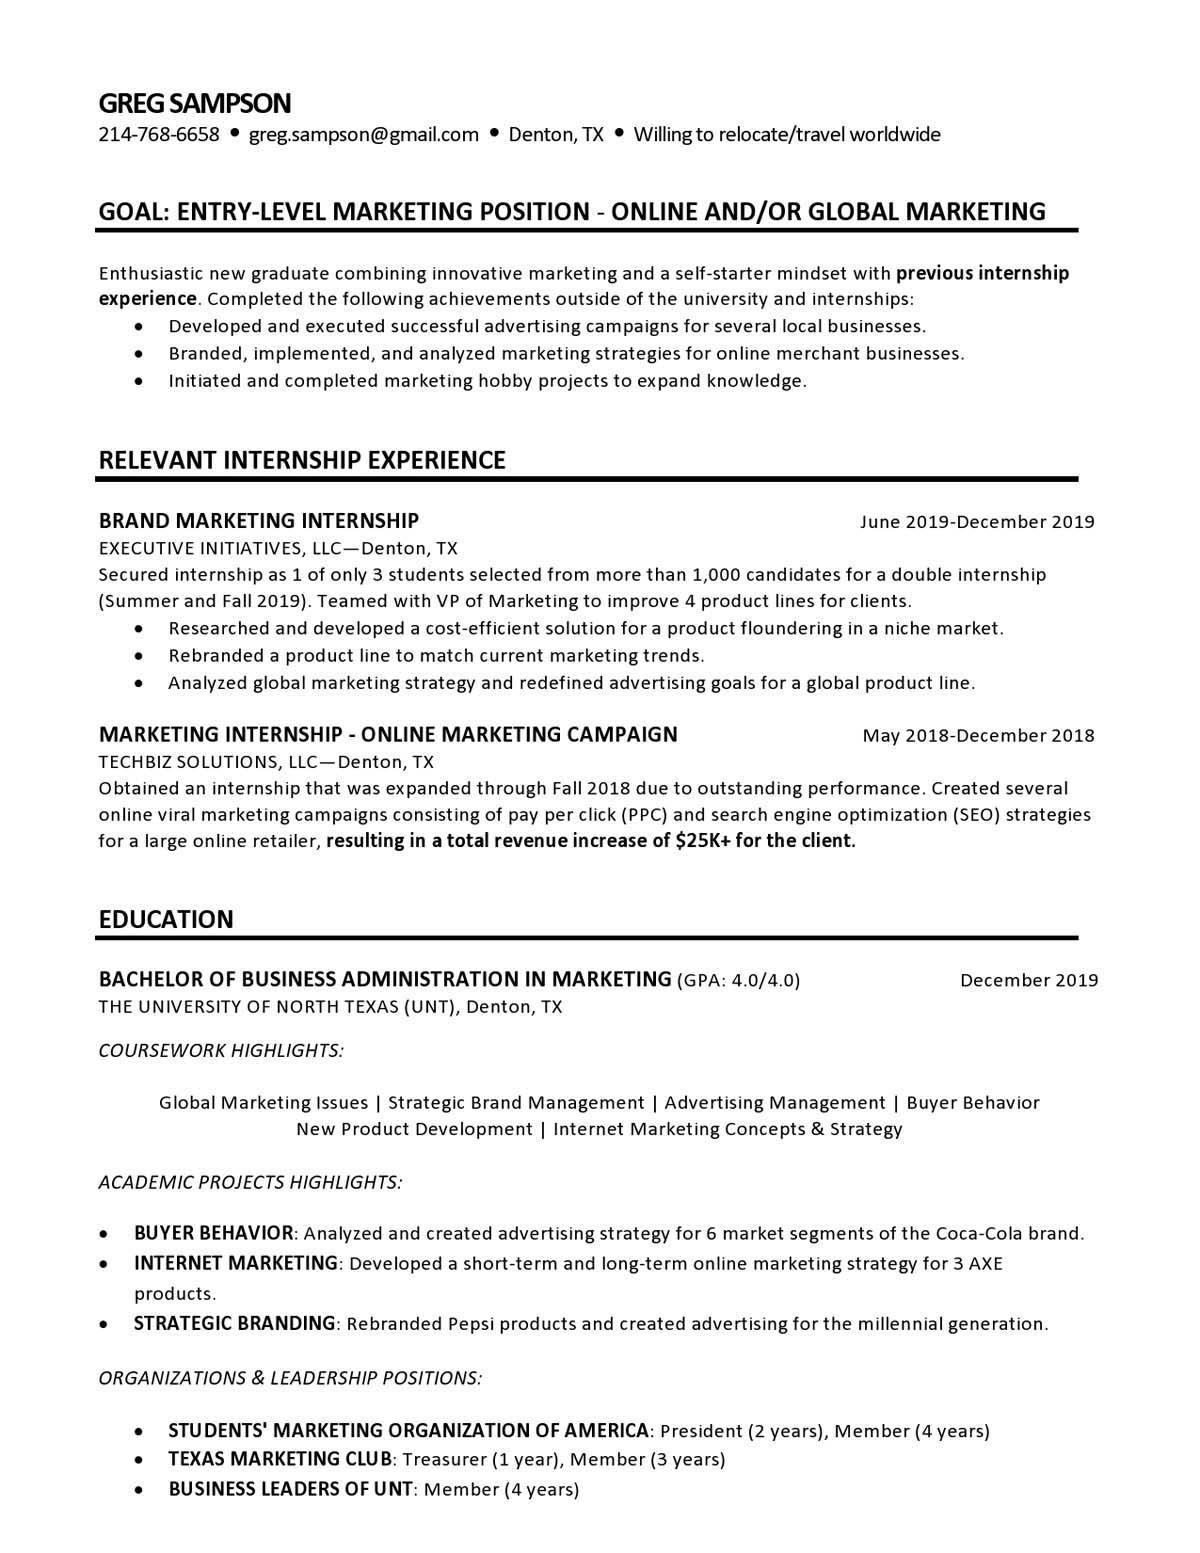 Sample resume: Marketing, Entry Level, Chronological